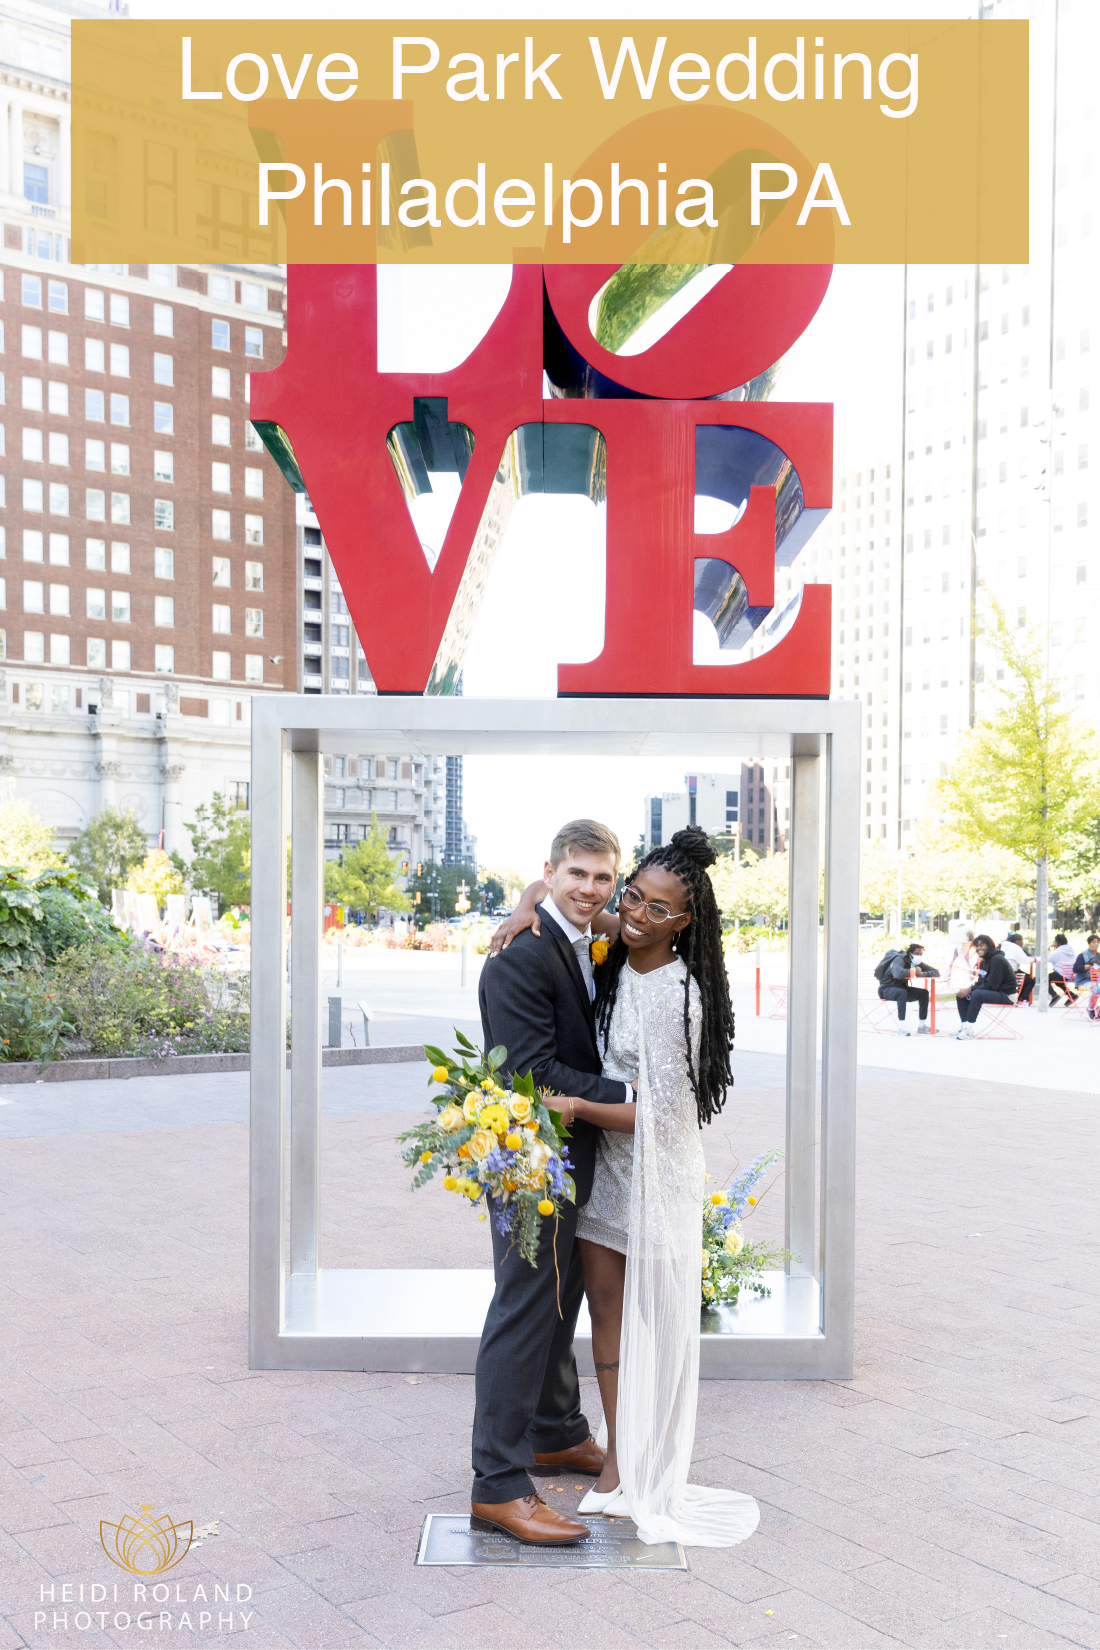 Love Statue wedding in Philadelphia